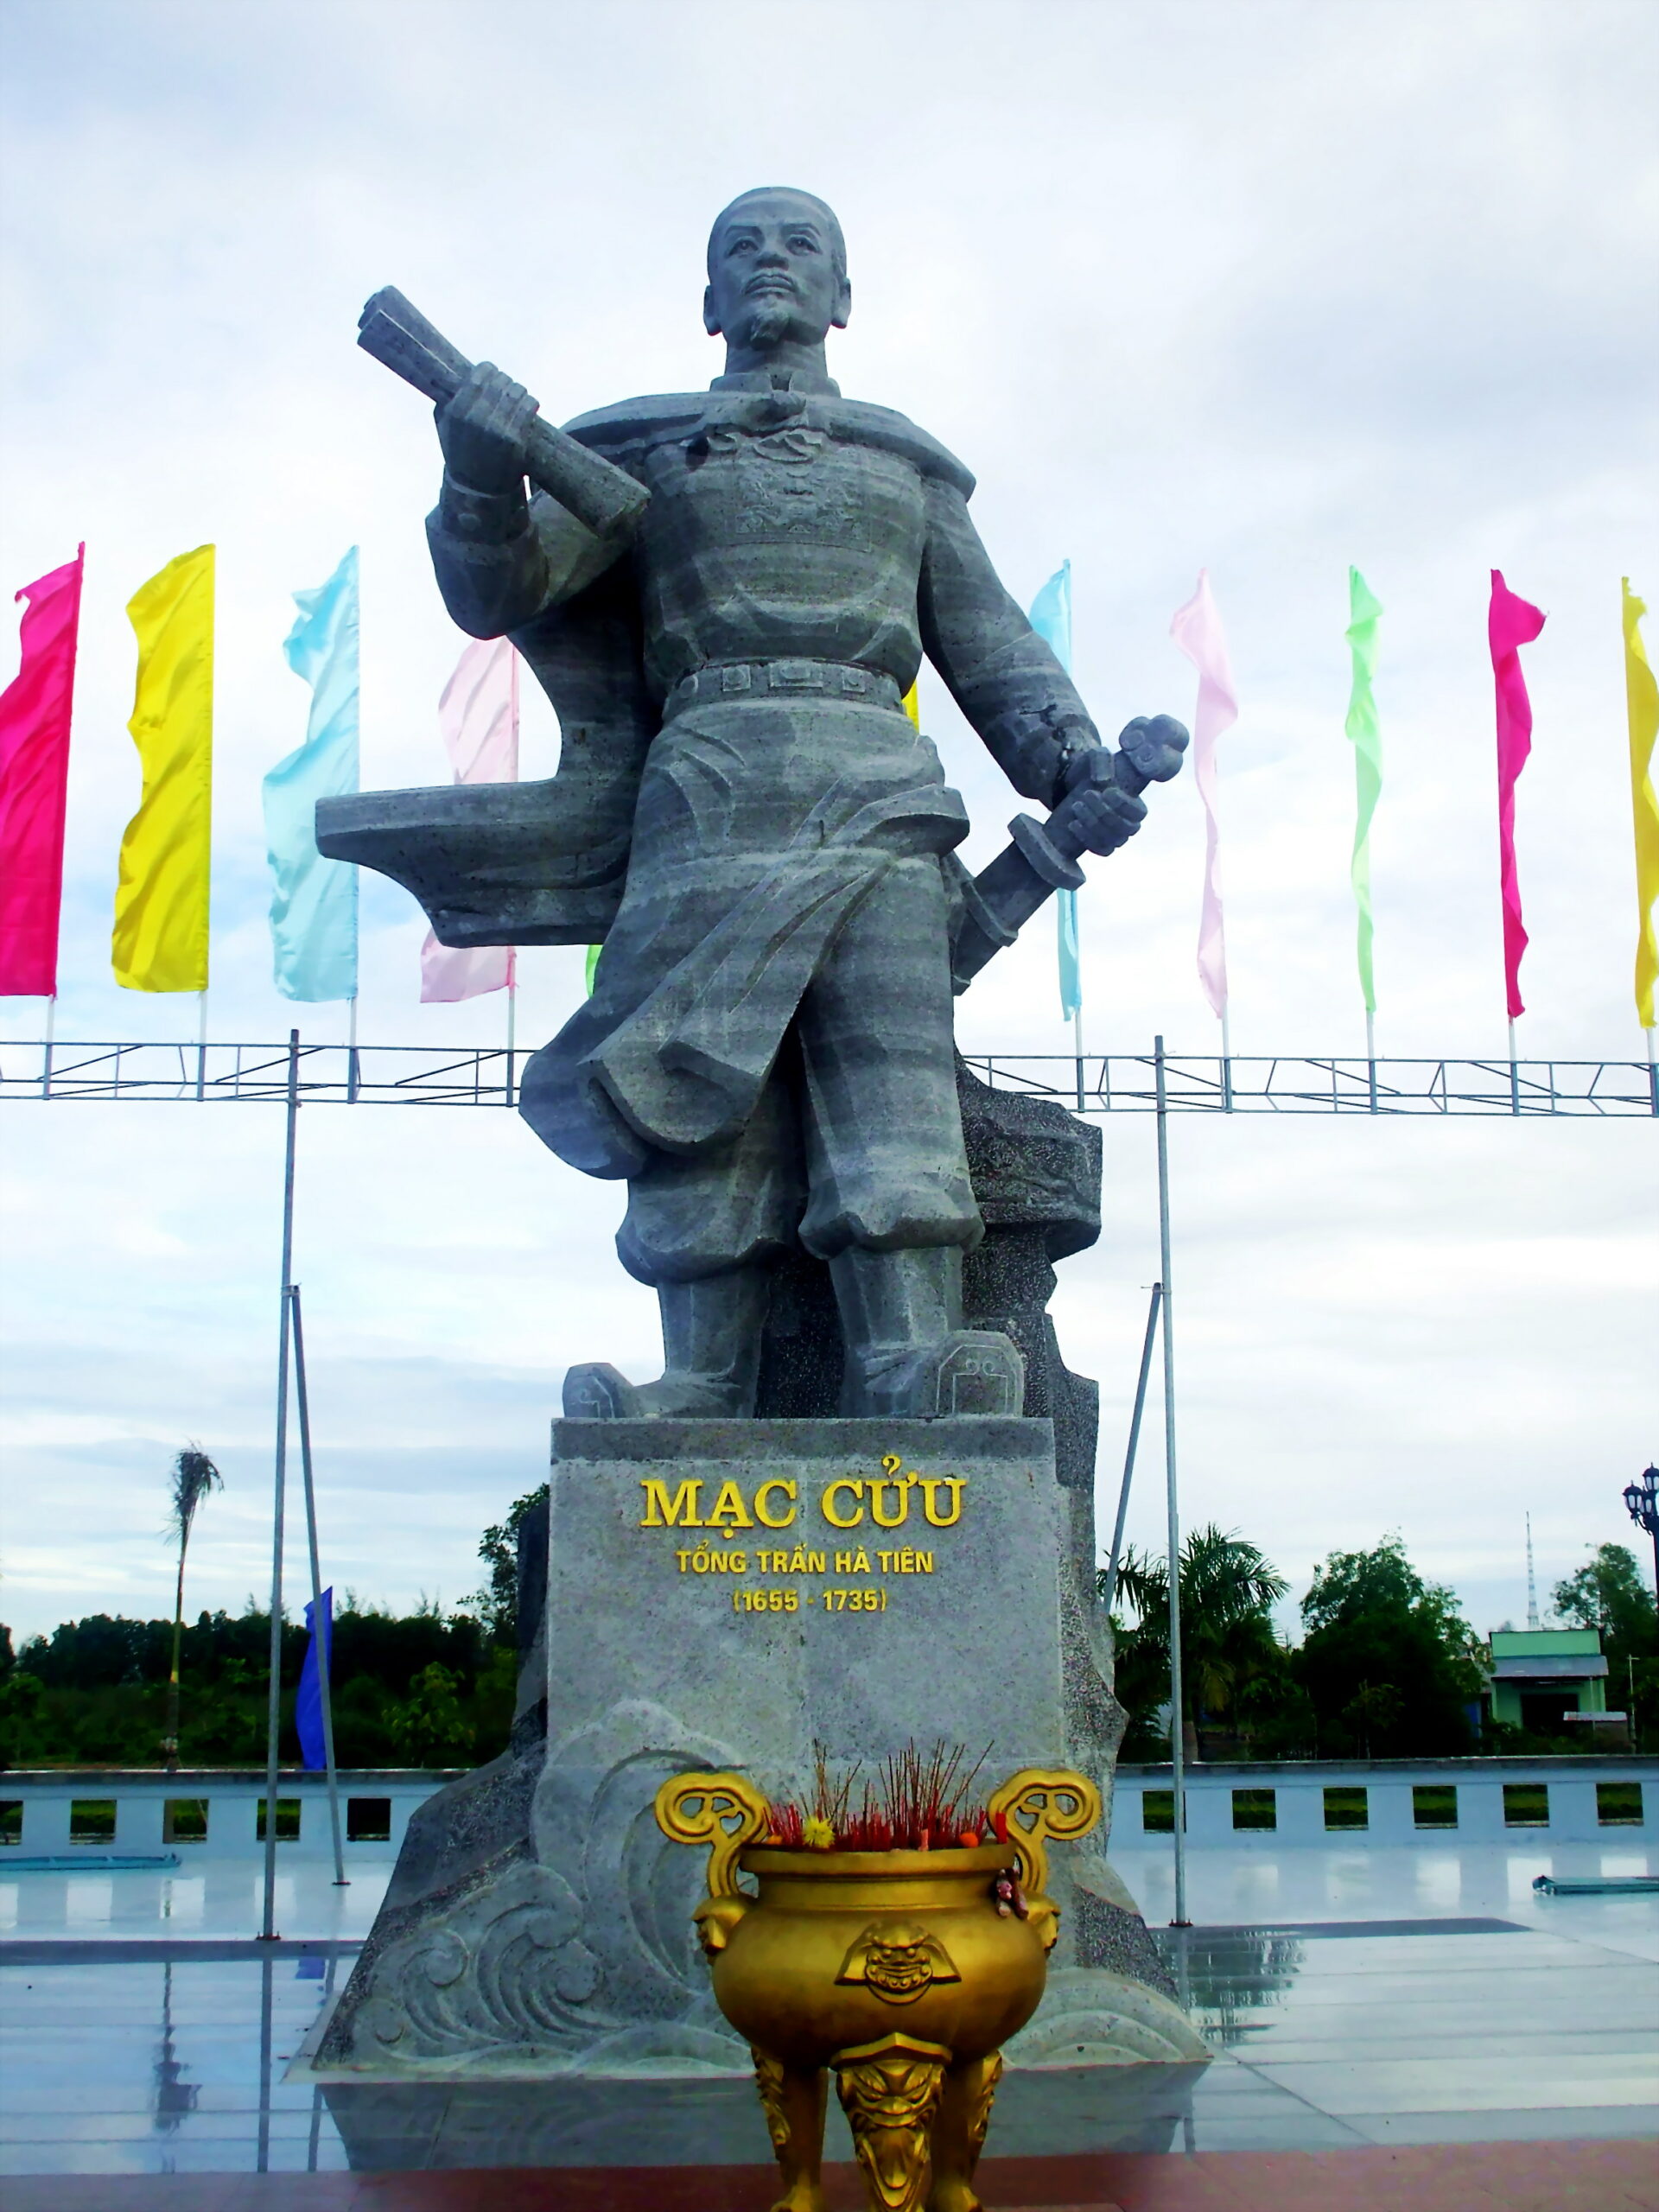 Mac Cuu Monument in downtown Ha Tien